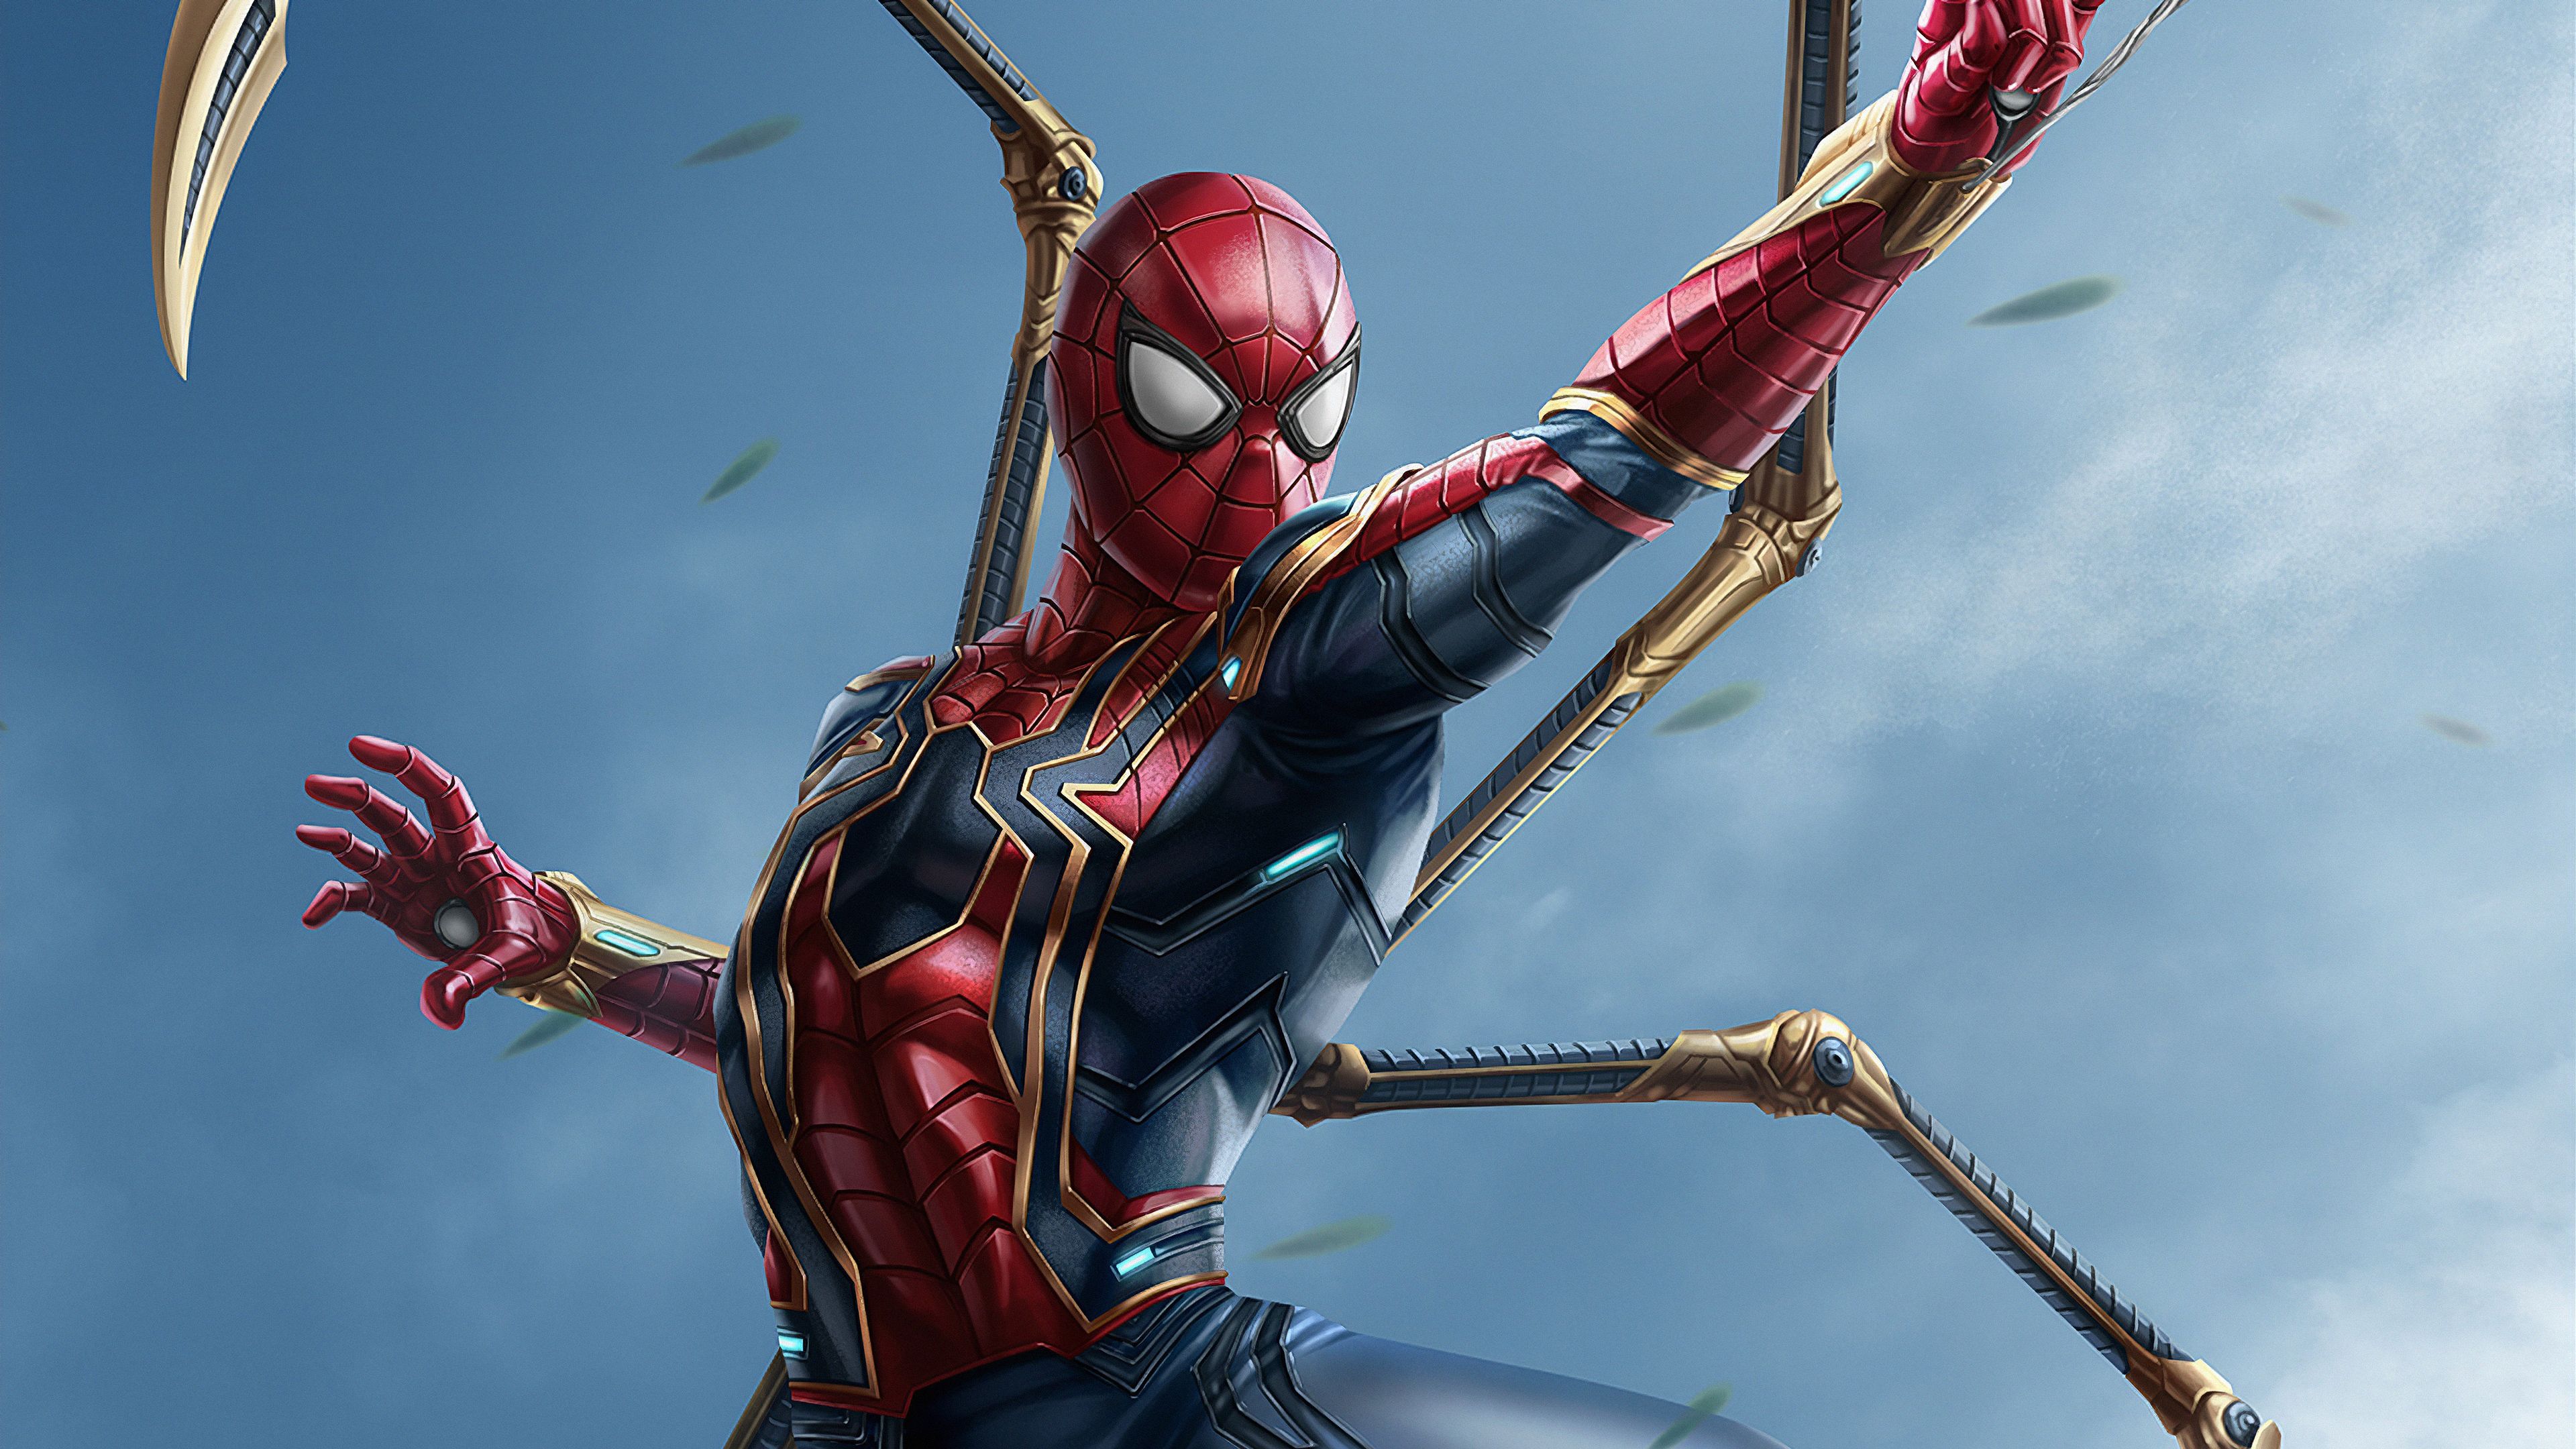 Iron Spider Man Archives - Live Desktop Wallpapers